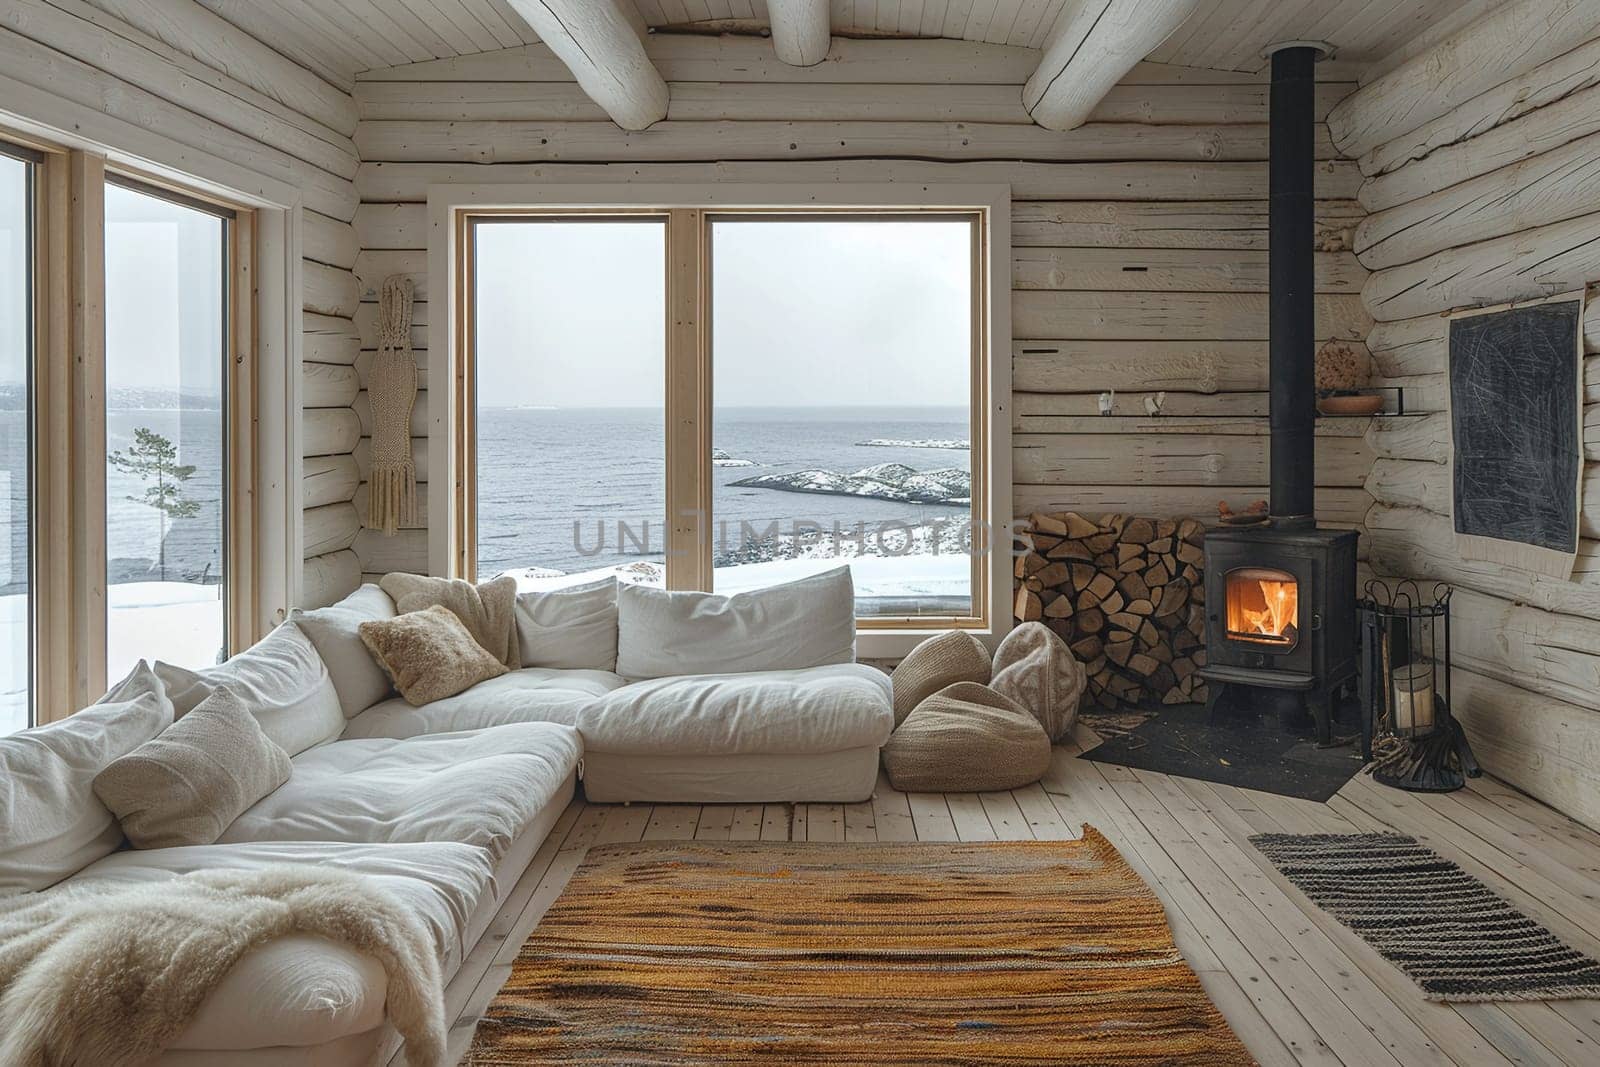 Scandinavian cabin with a wood stove and minimalist furnishings